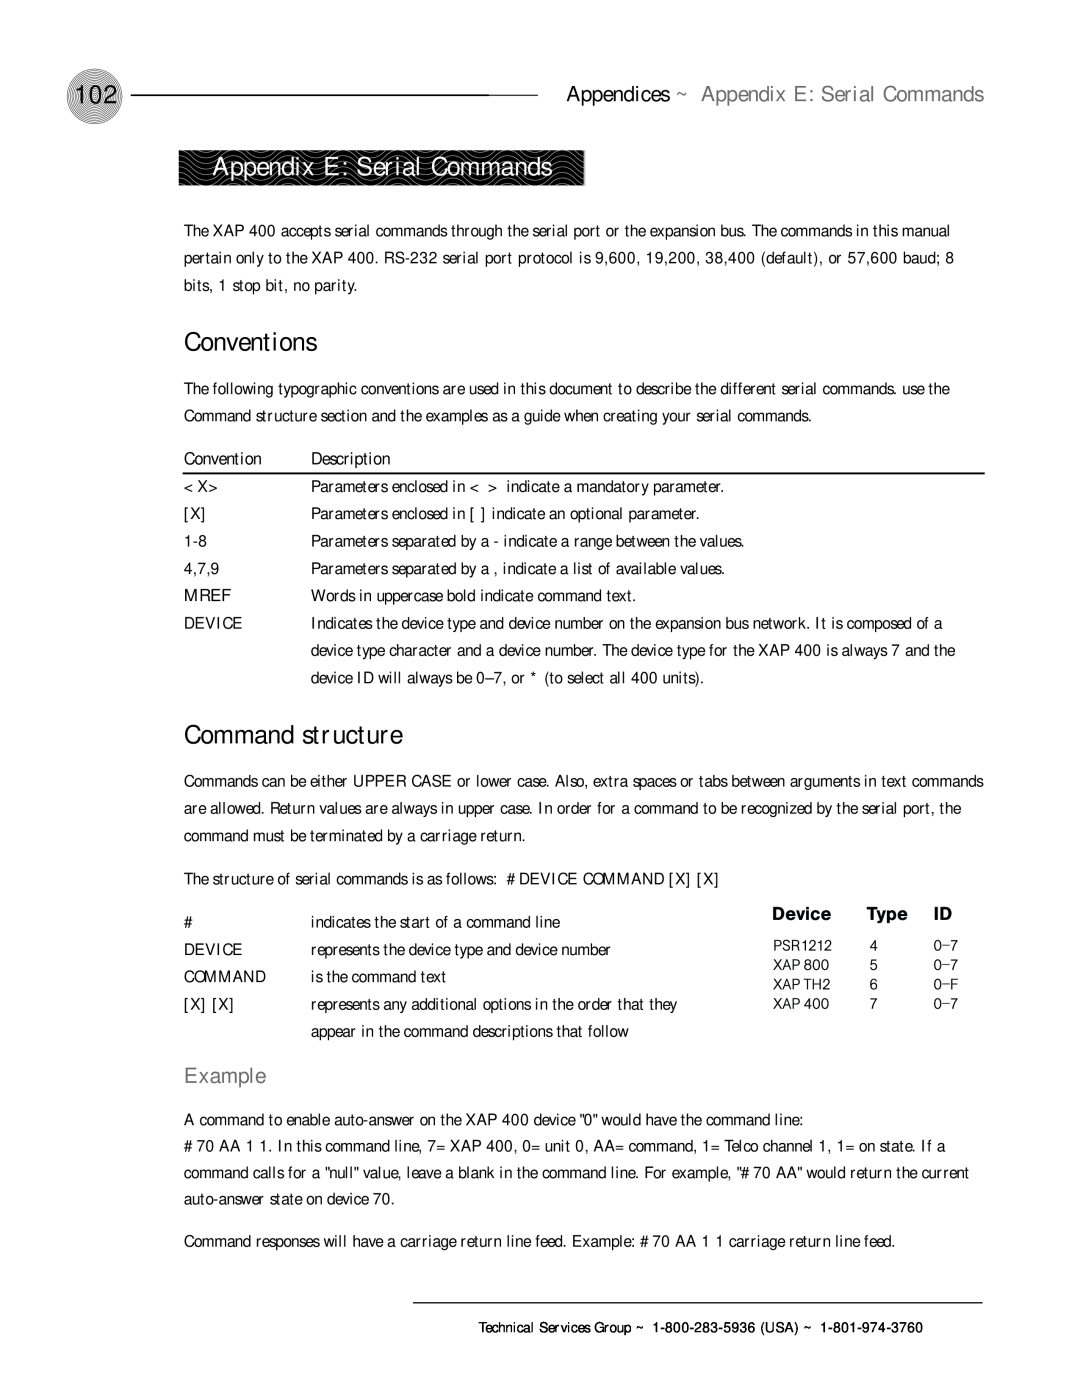 ClearOne comm XAP 400 Appendix E: Serial Commands, Conventions, Command structure, Example, Convention Description, Mref 